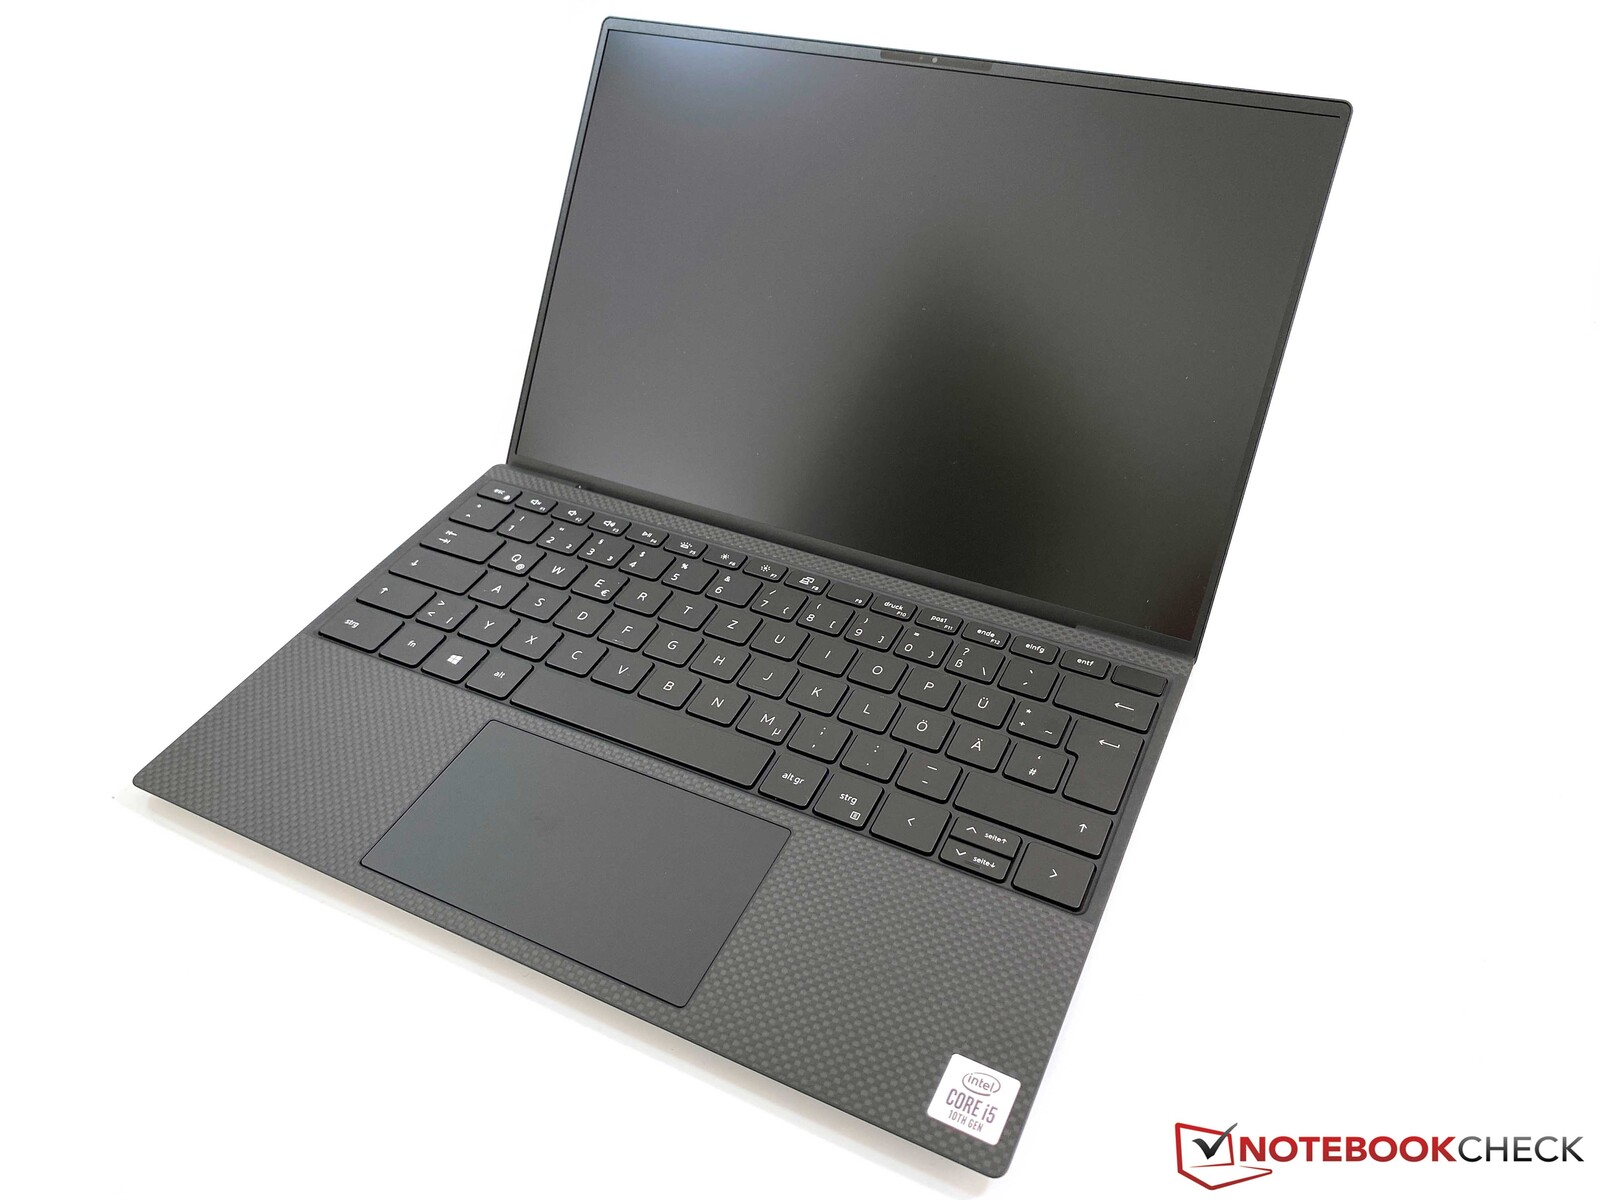 Dell XPS 13 9300 i5 FHD - Notebookcheck.net External Reviews